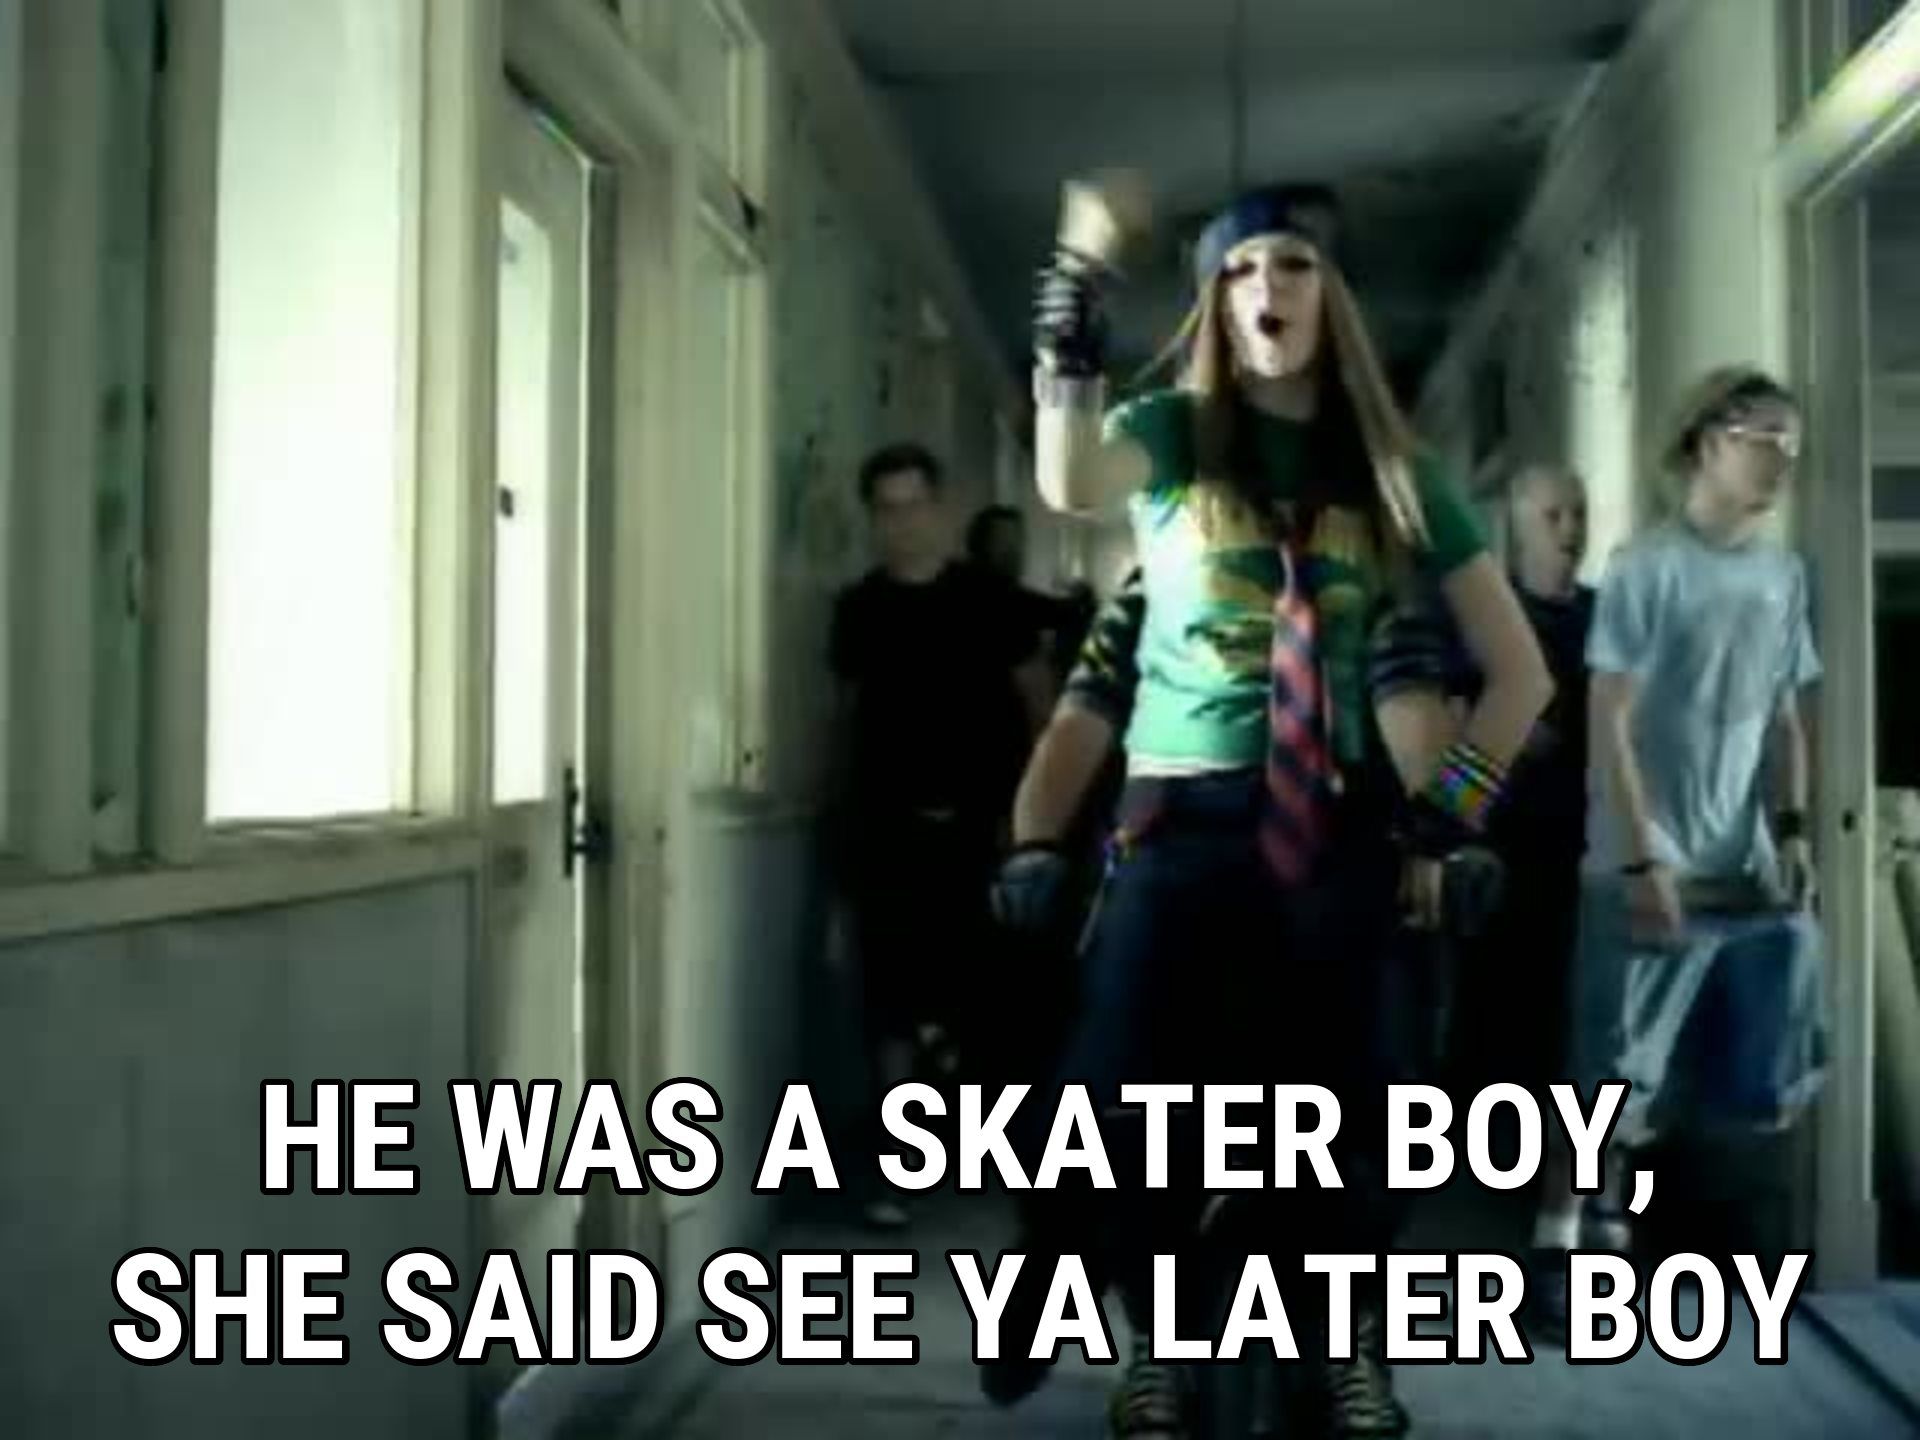 Sk8er Boi lyrics Avril Lavigne song in image